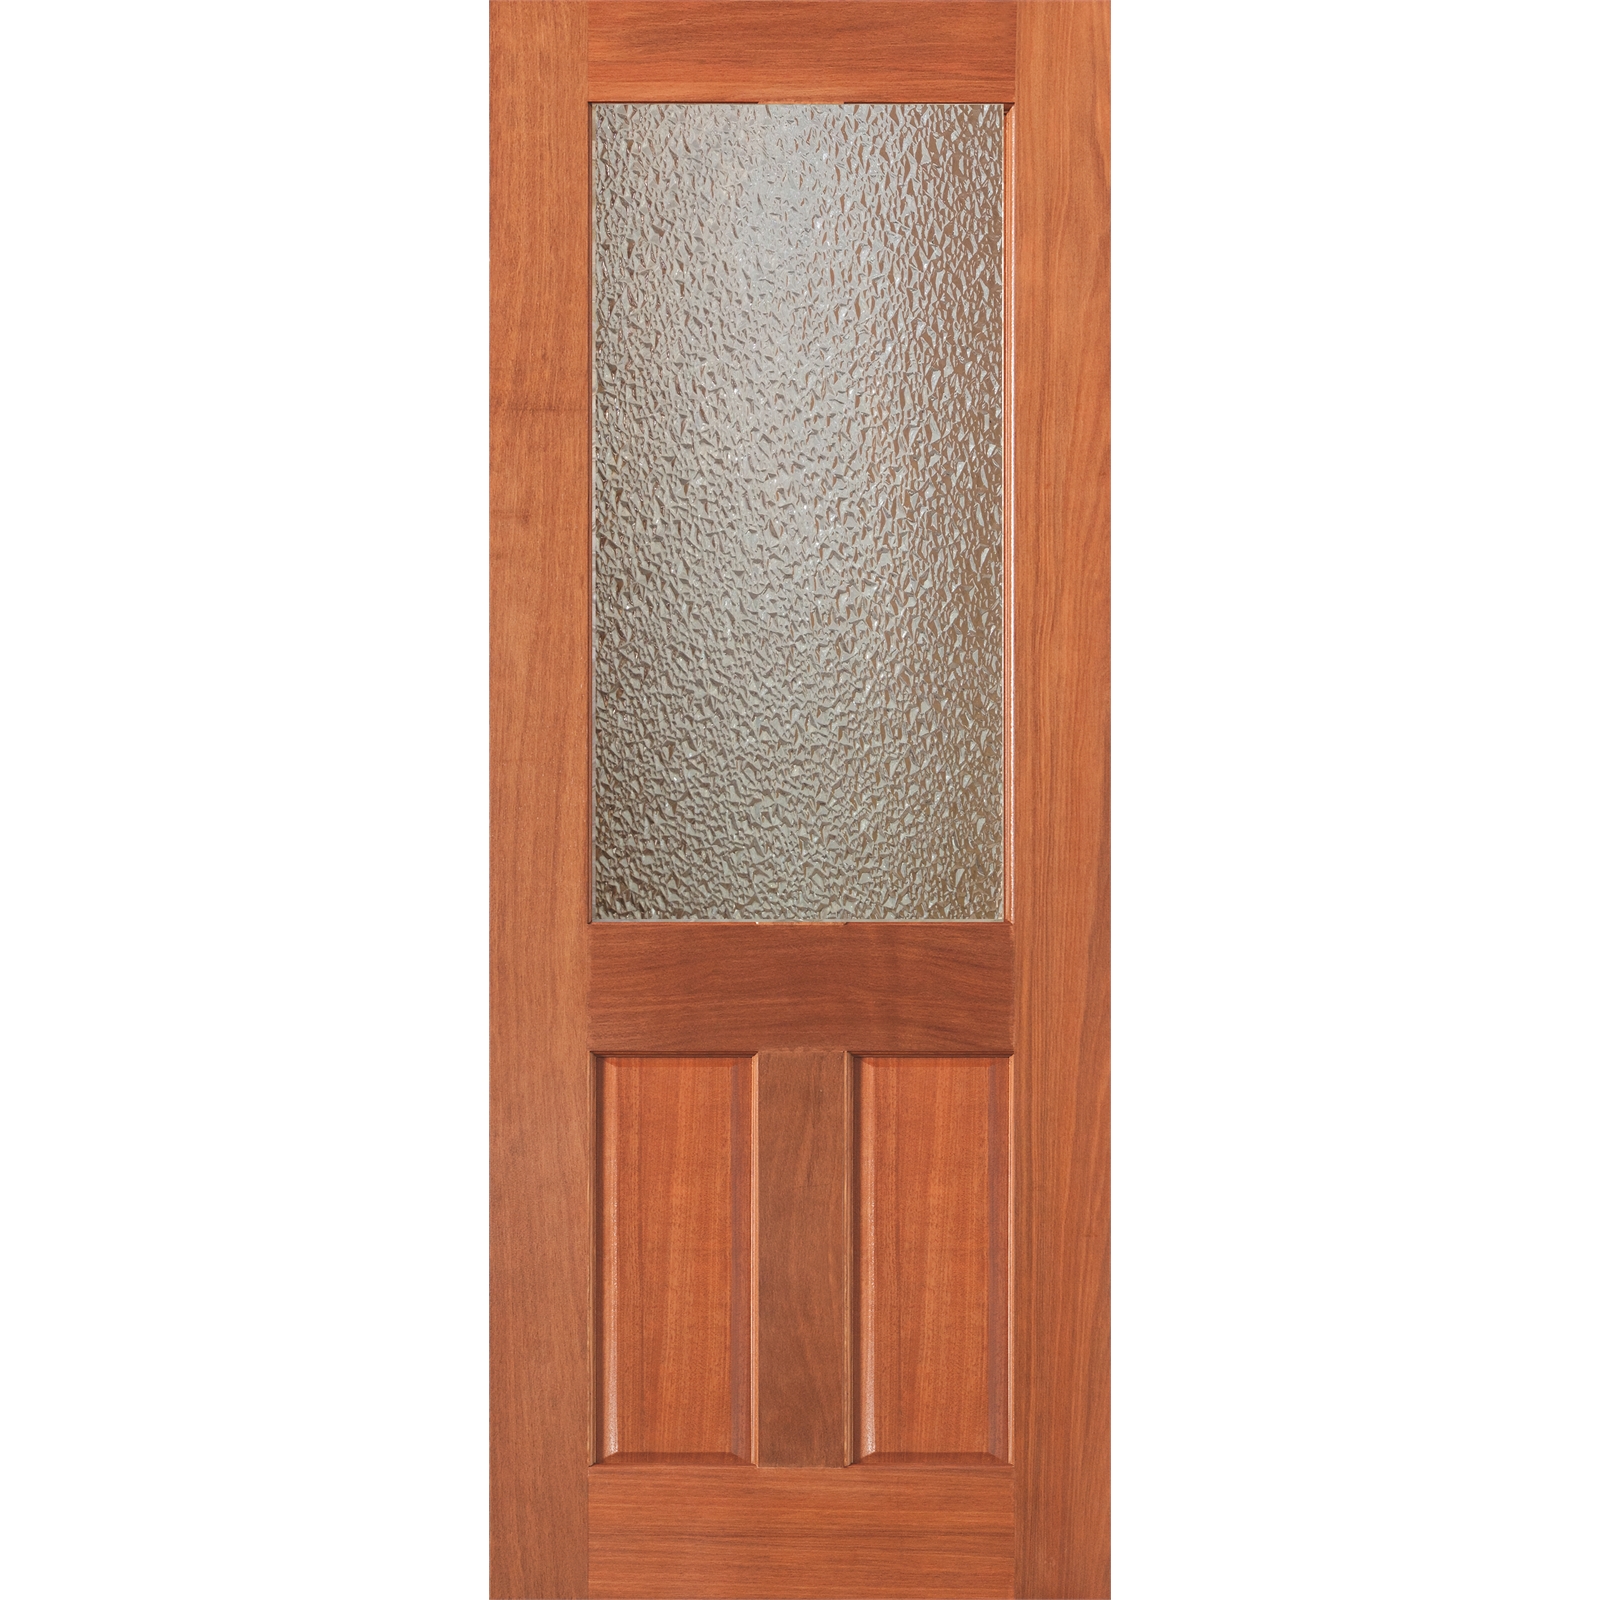 Woodcraft Doors 2040 x 820 x 35mm Diamond Safety Glass Half Lite Internal Door